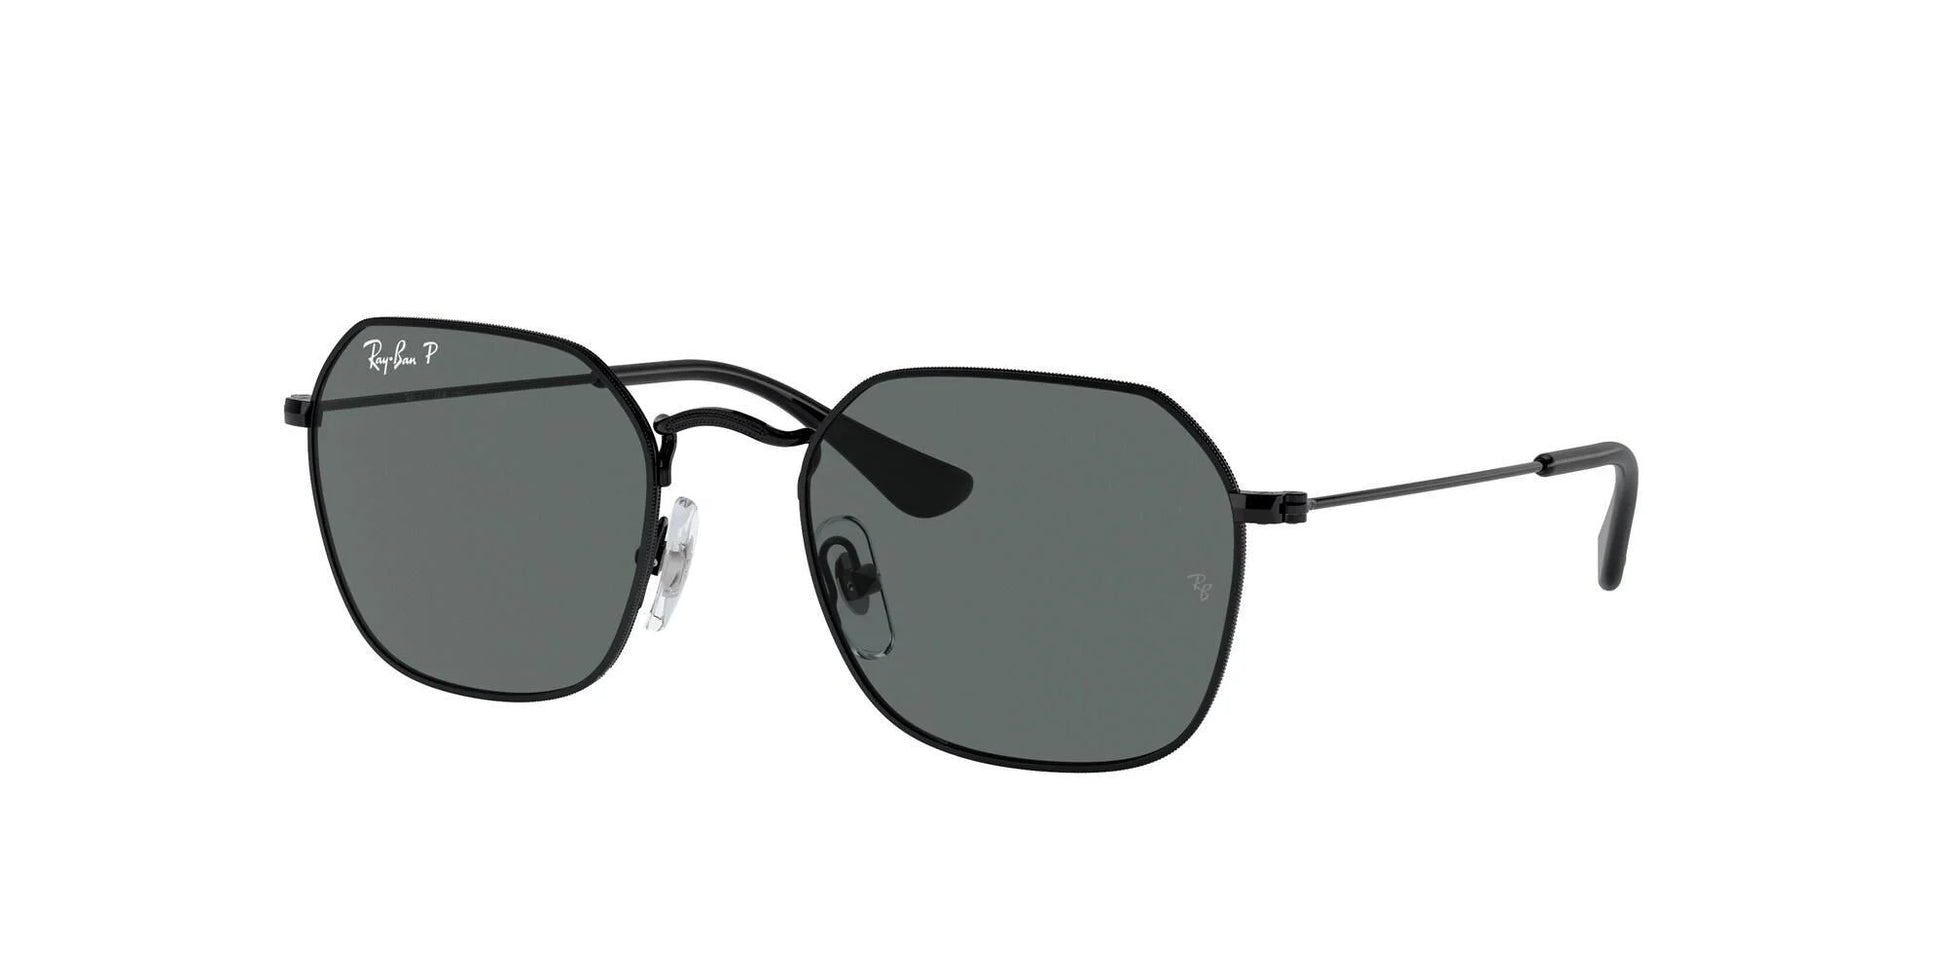 Ray-Ban RJ9594S Sunglasses Black / Dark Grey (Polarized)